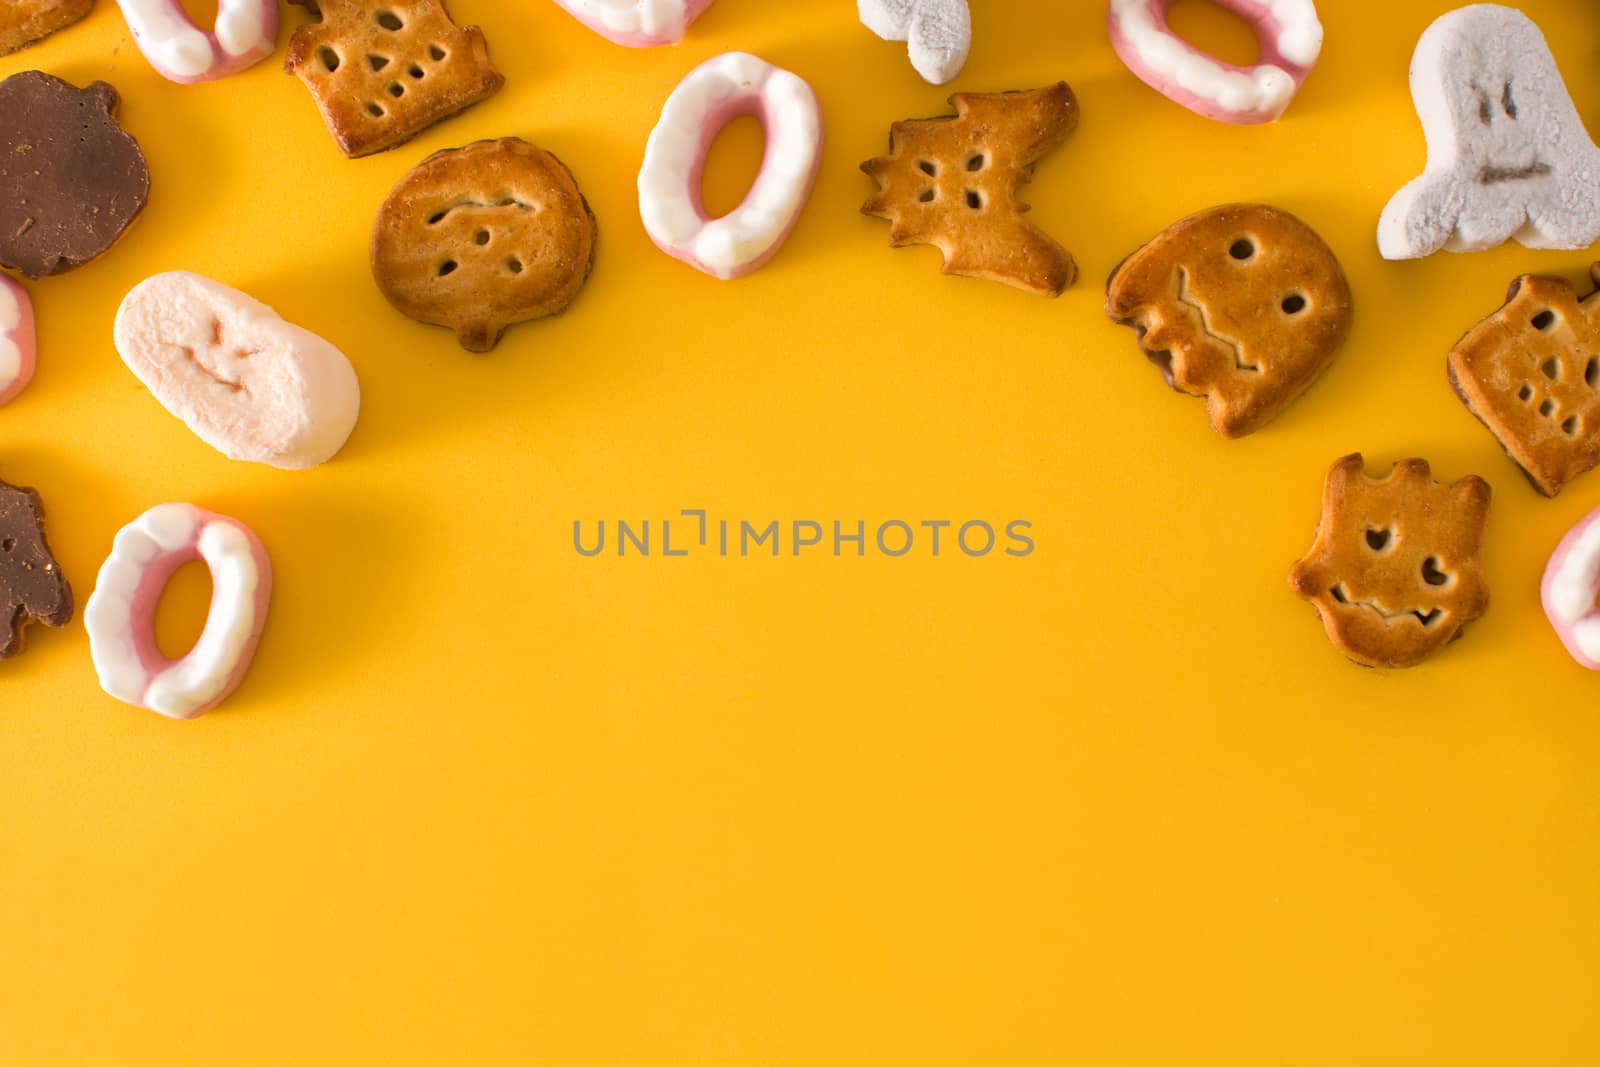 Assortment of Halloween cookies on yellow background